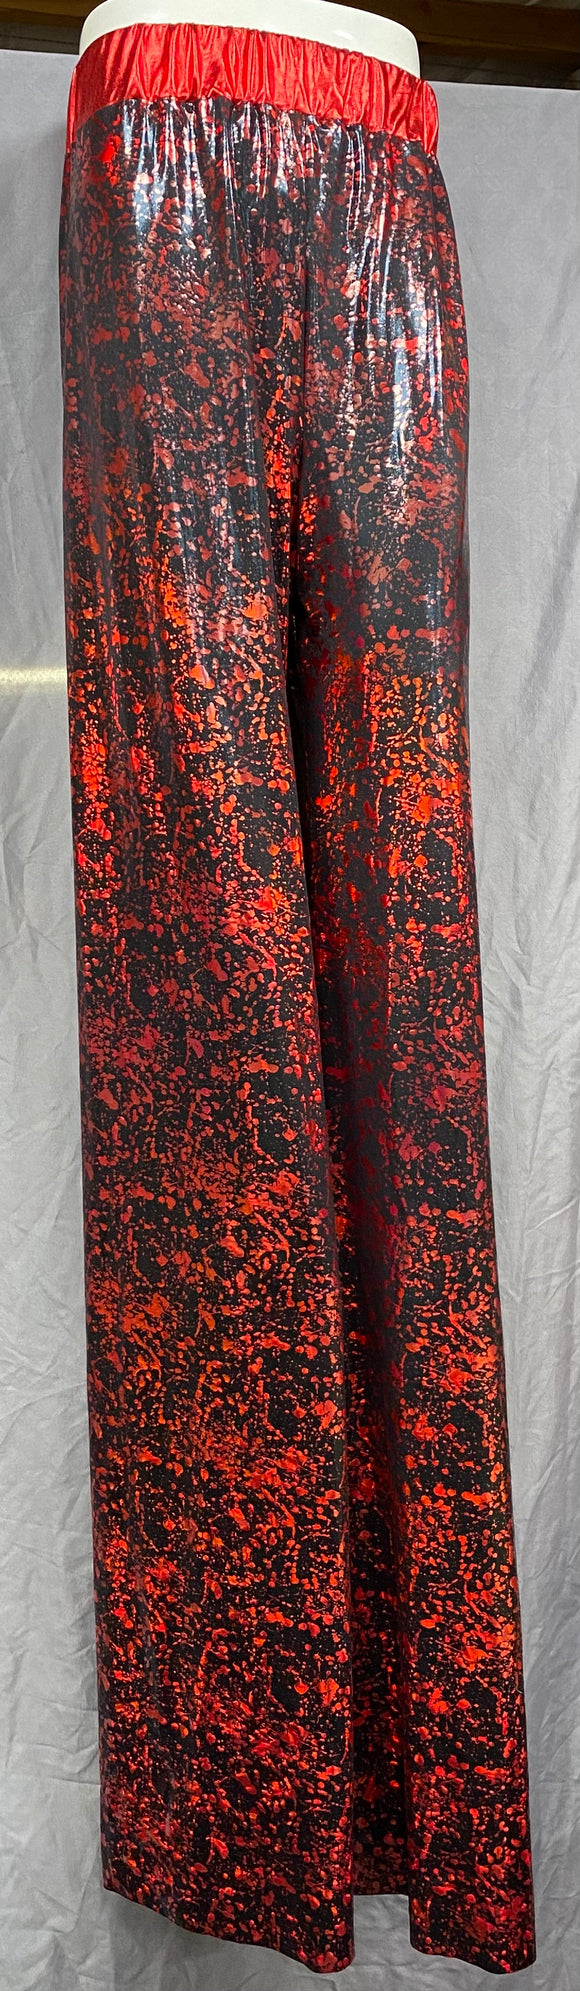 Stilt Pants - Black with Red Splatter 67